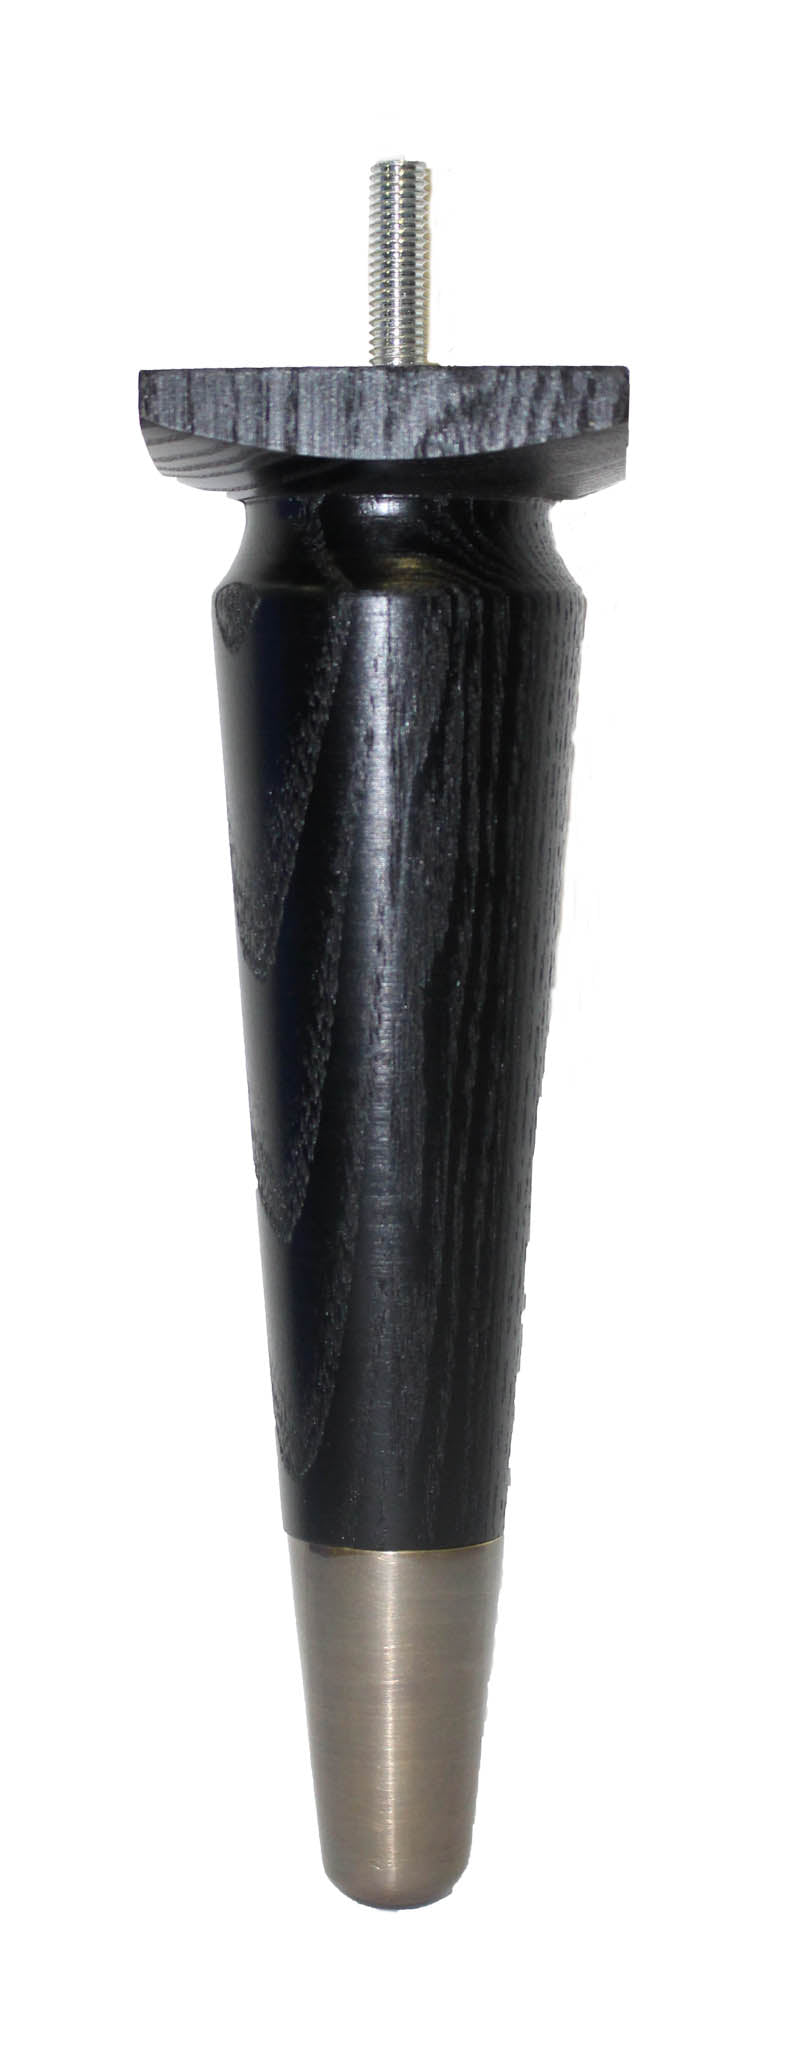 Tia Furniture Legs - Ash Black Finish - Antique Slipper Cups - Set of 4